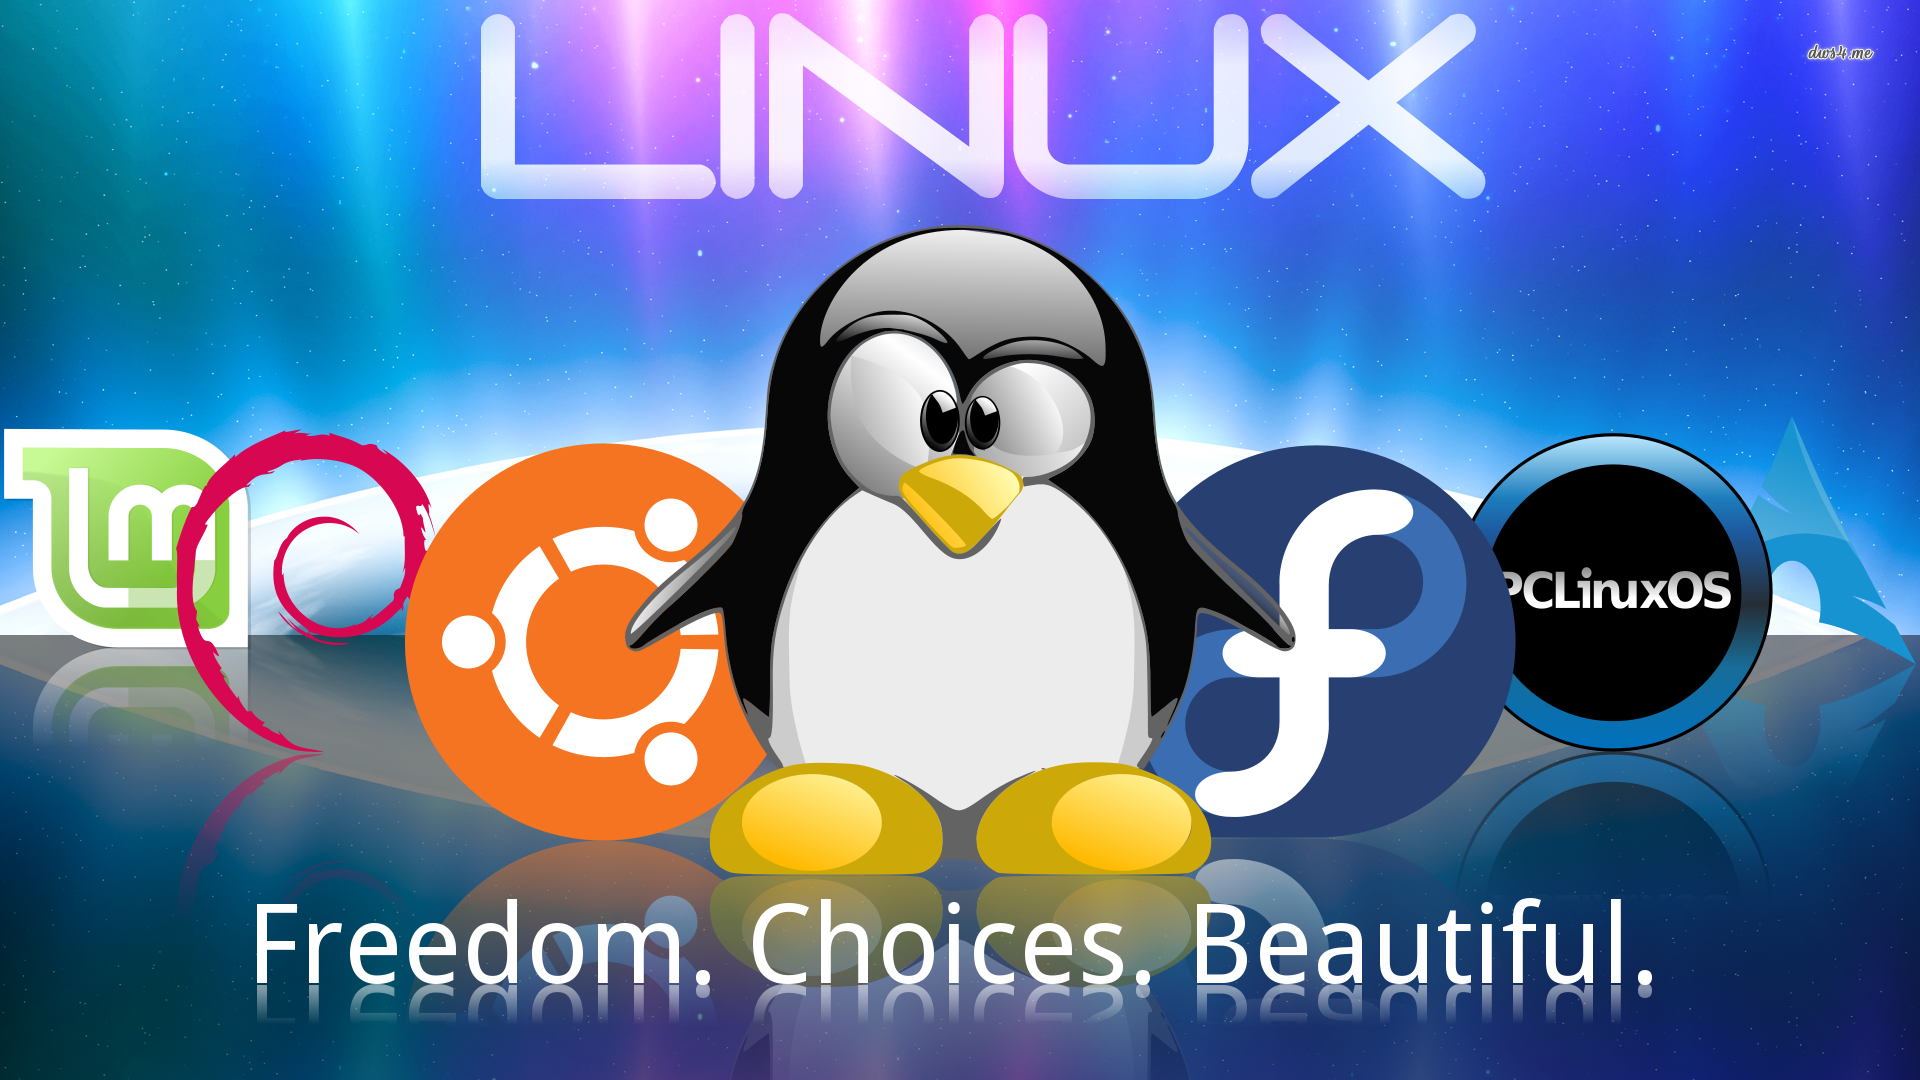 Linux Tux Ubuntu Debian Fedora Logos Hd Wallpaper - Different Types Of Operating System Desktops - HD Wallpaper 